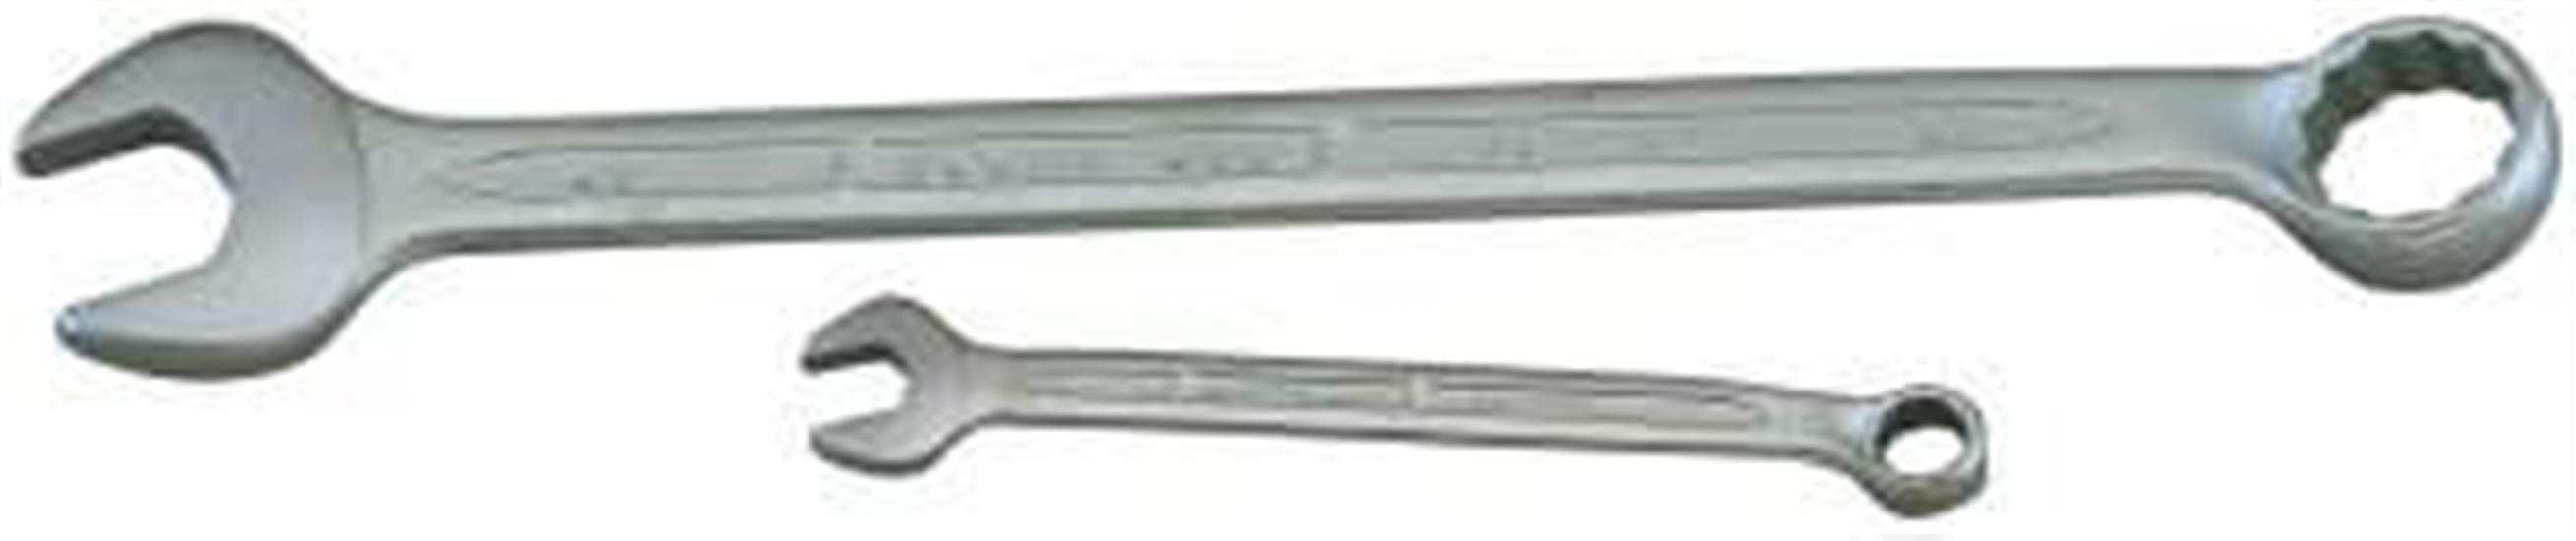 Draper 44012 𨈀) - 10mm Elora Long Stainless Steel Combination Spanner